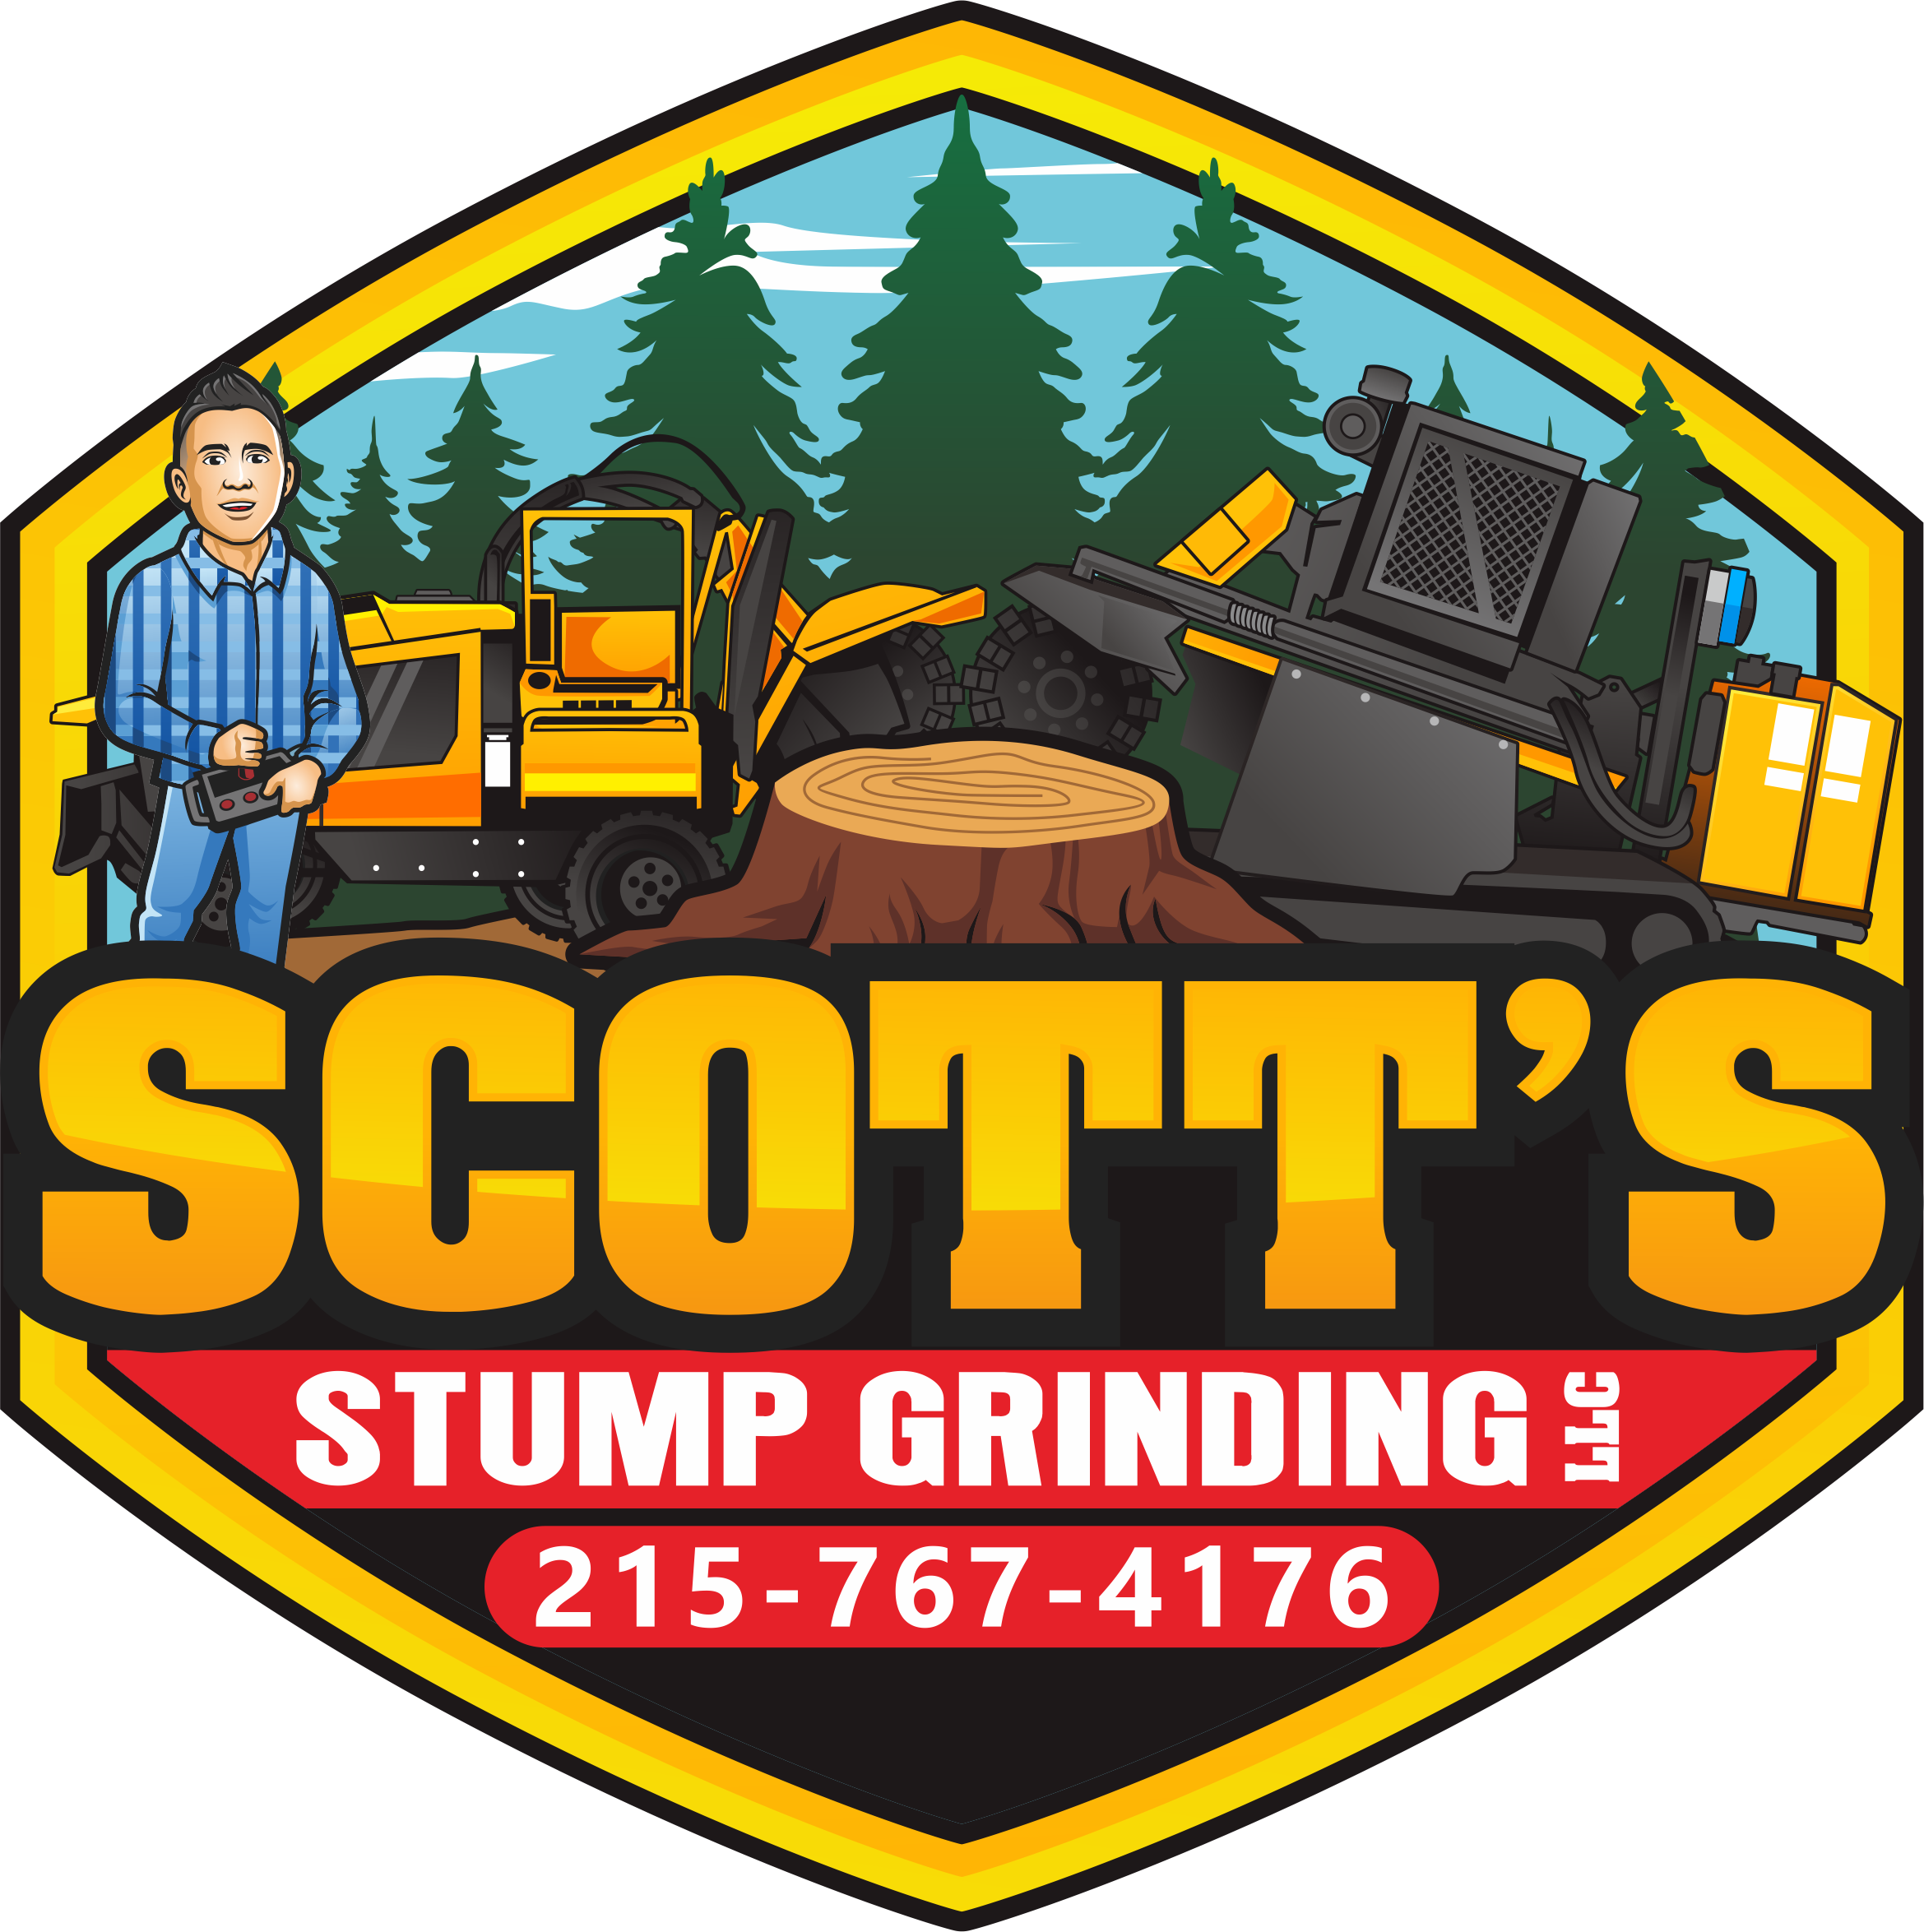 Scott’s Stump Grinding LLC